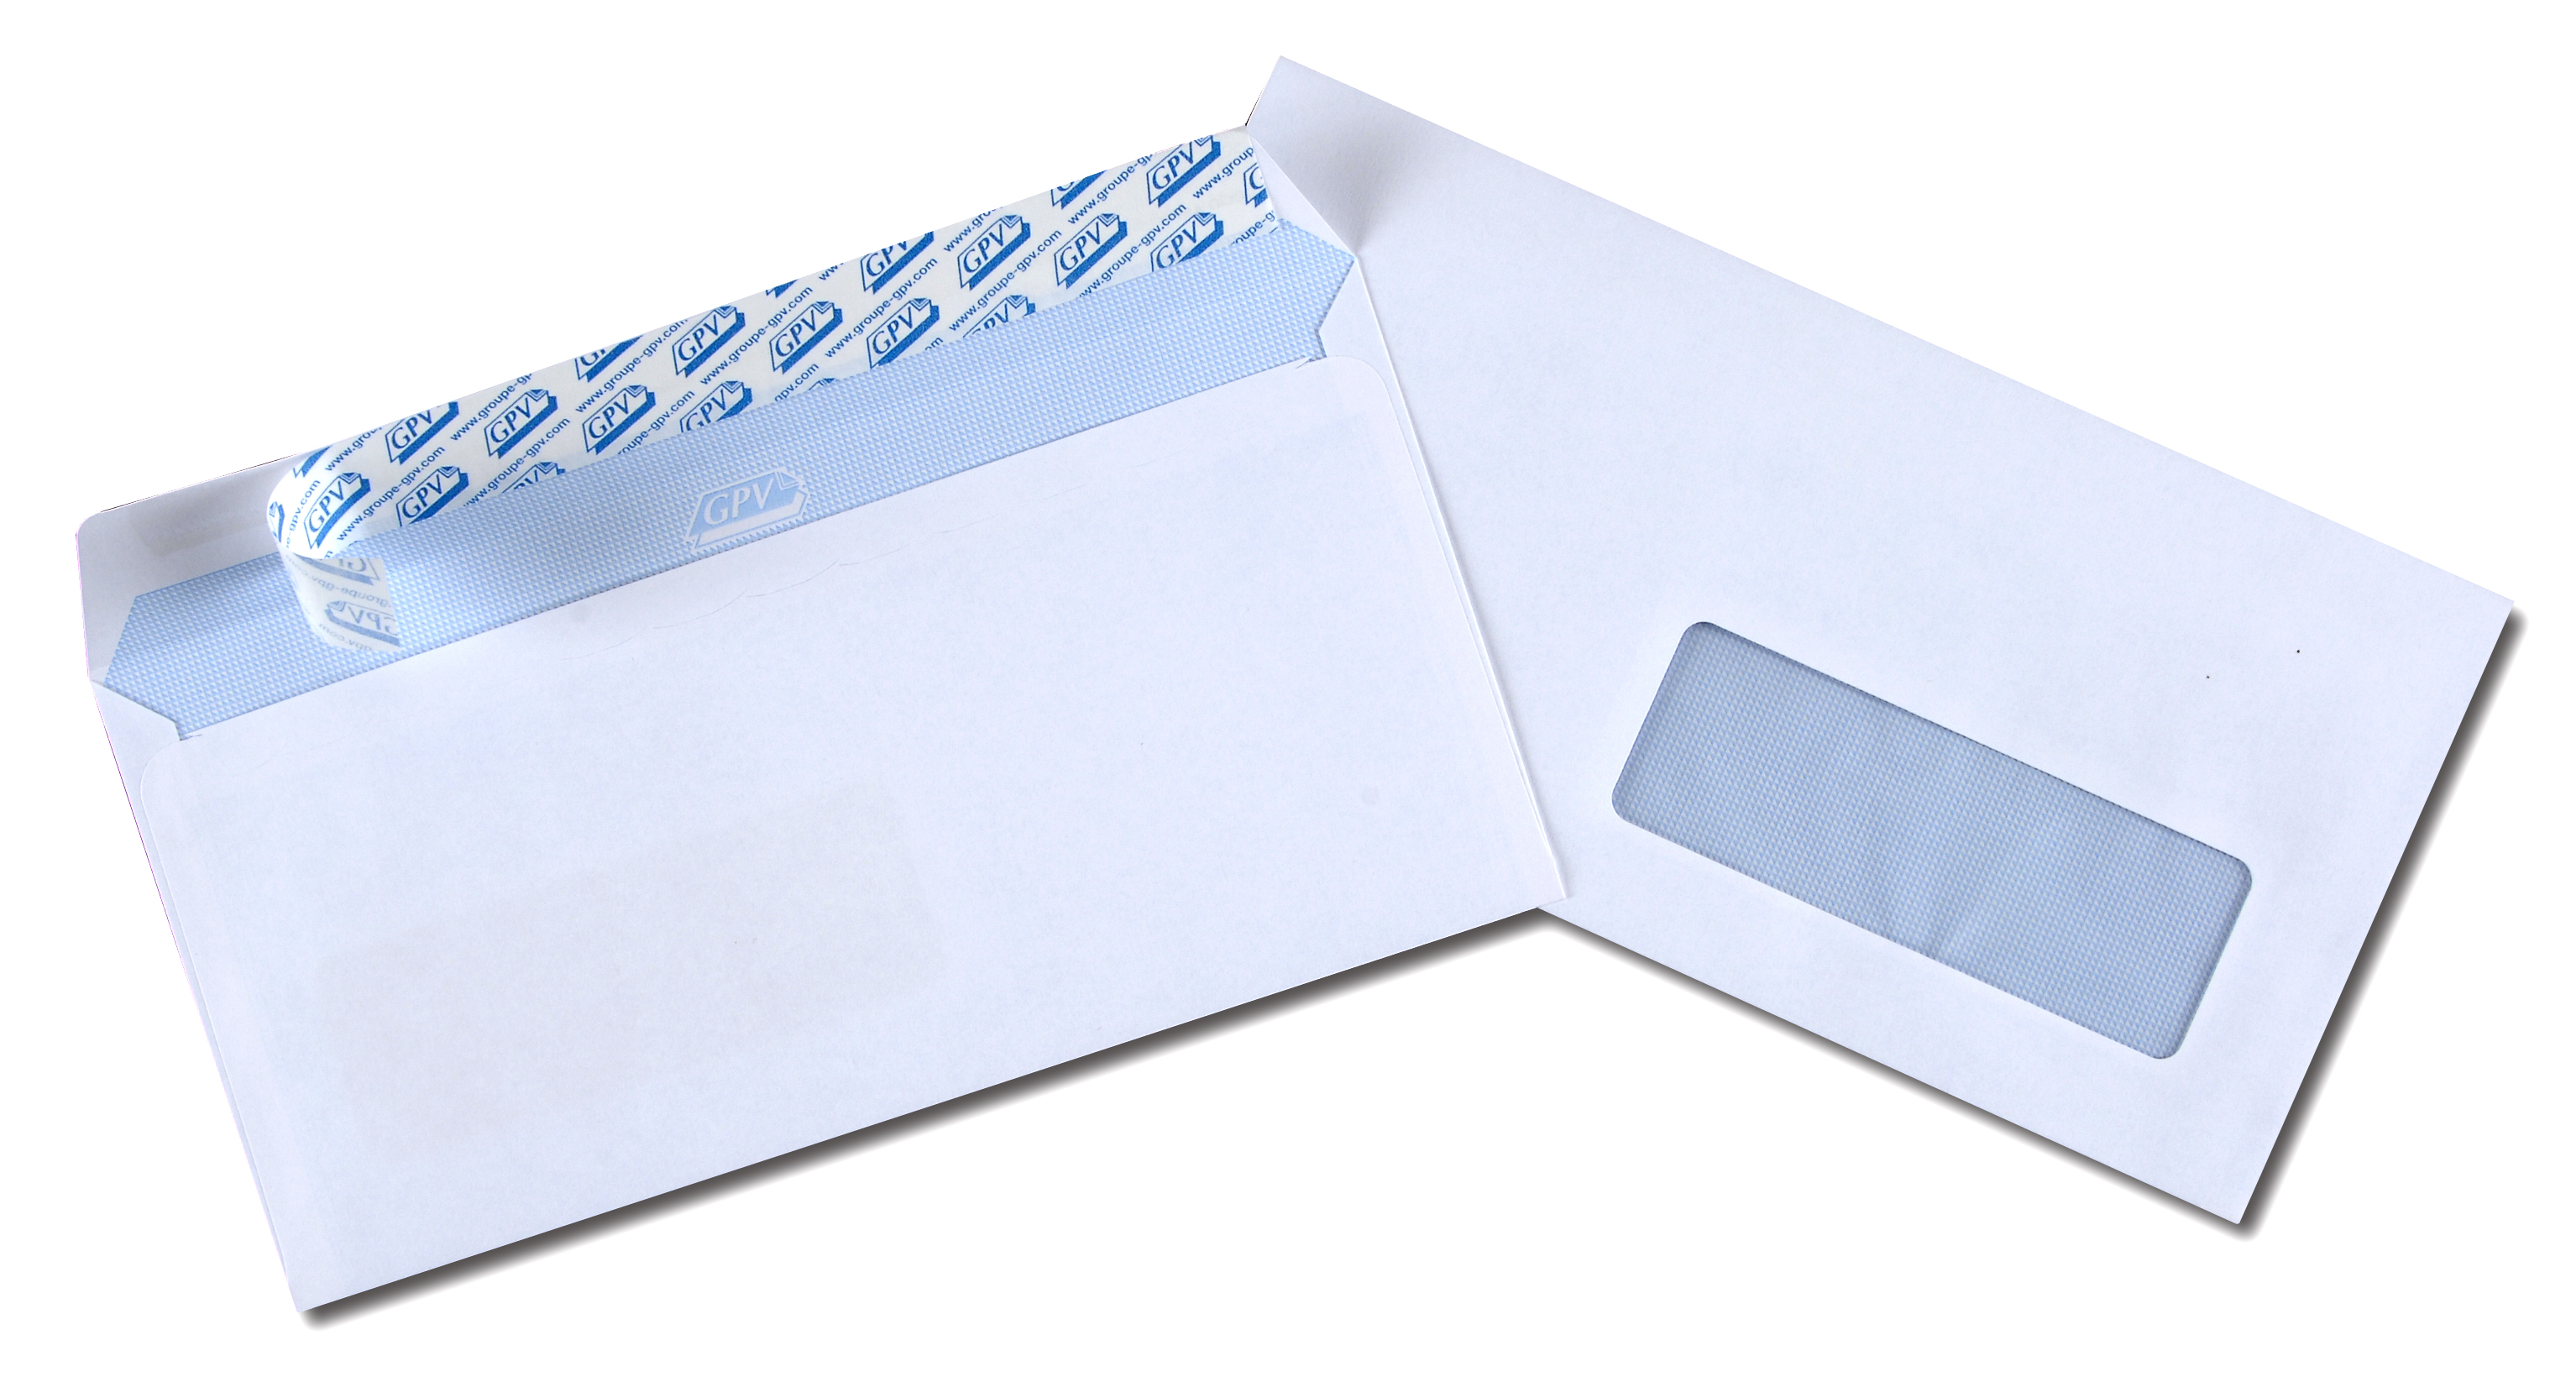 Enveloppes GPV recyclées 110*220 avec fenêtre